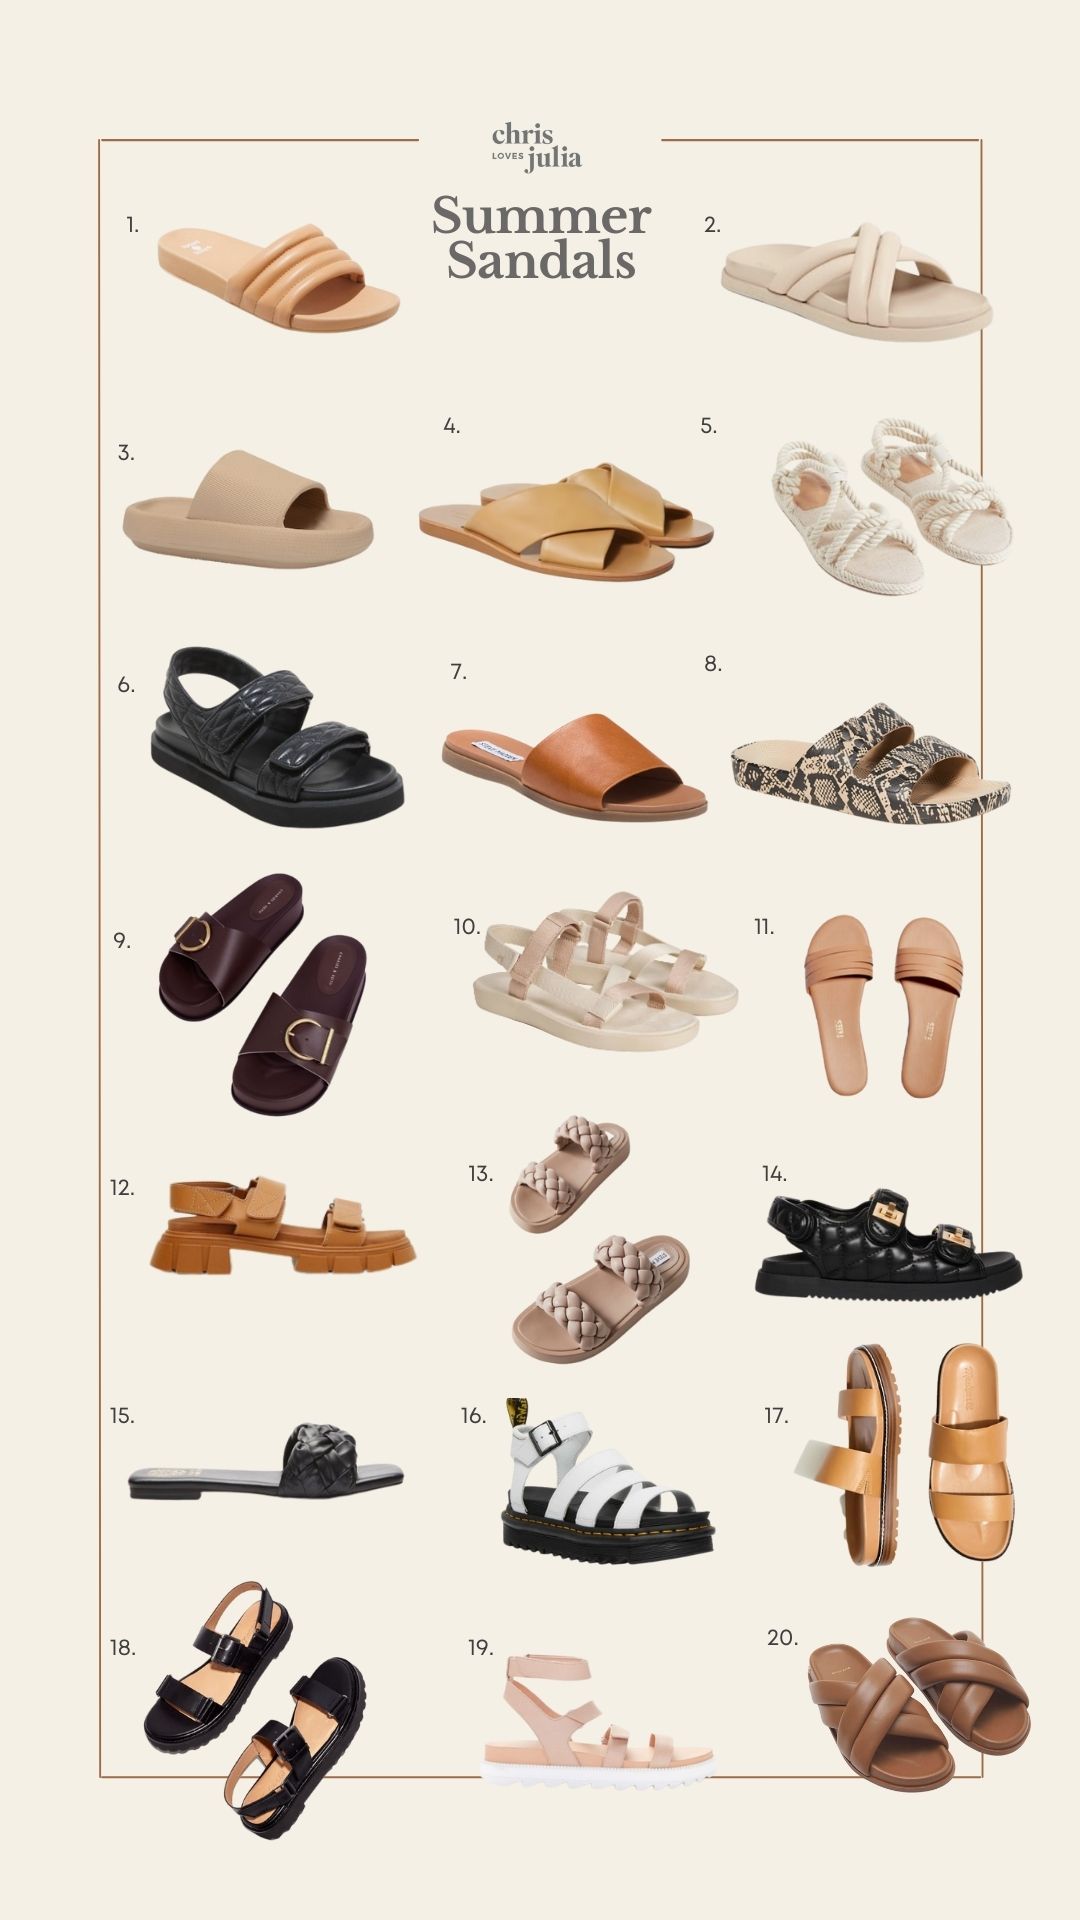 20 Summer Sandals I Love! - Chris Loves Julia